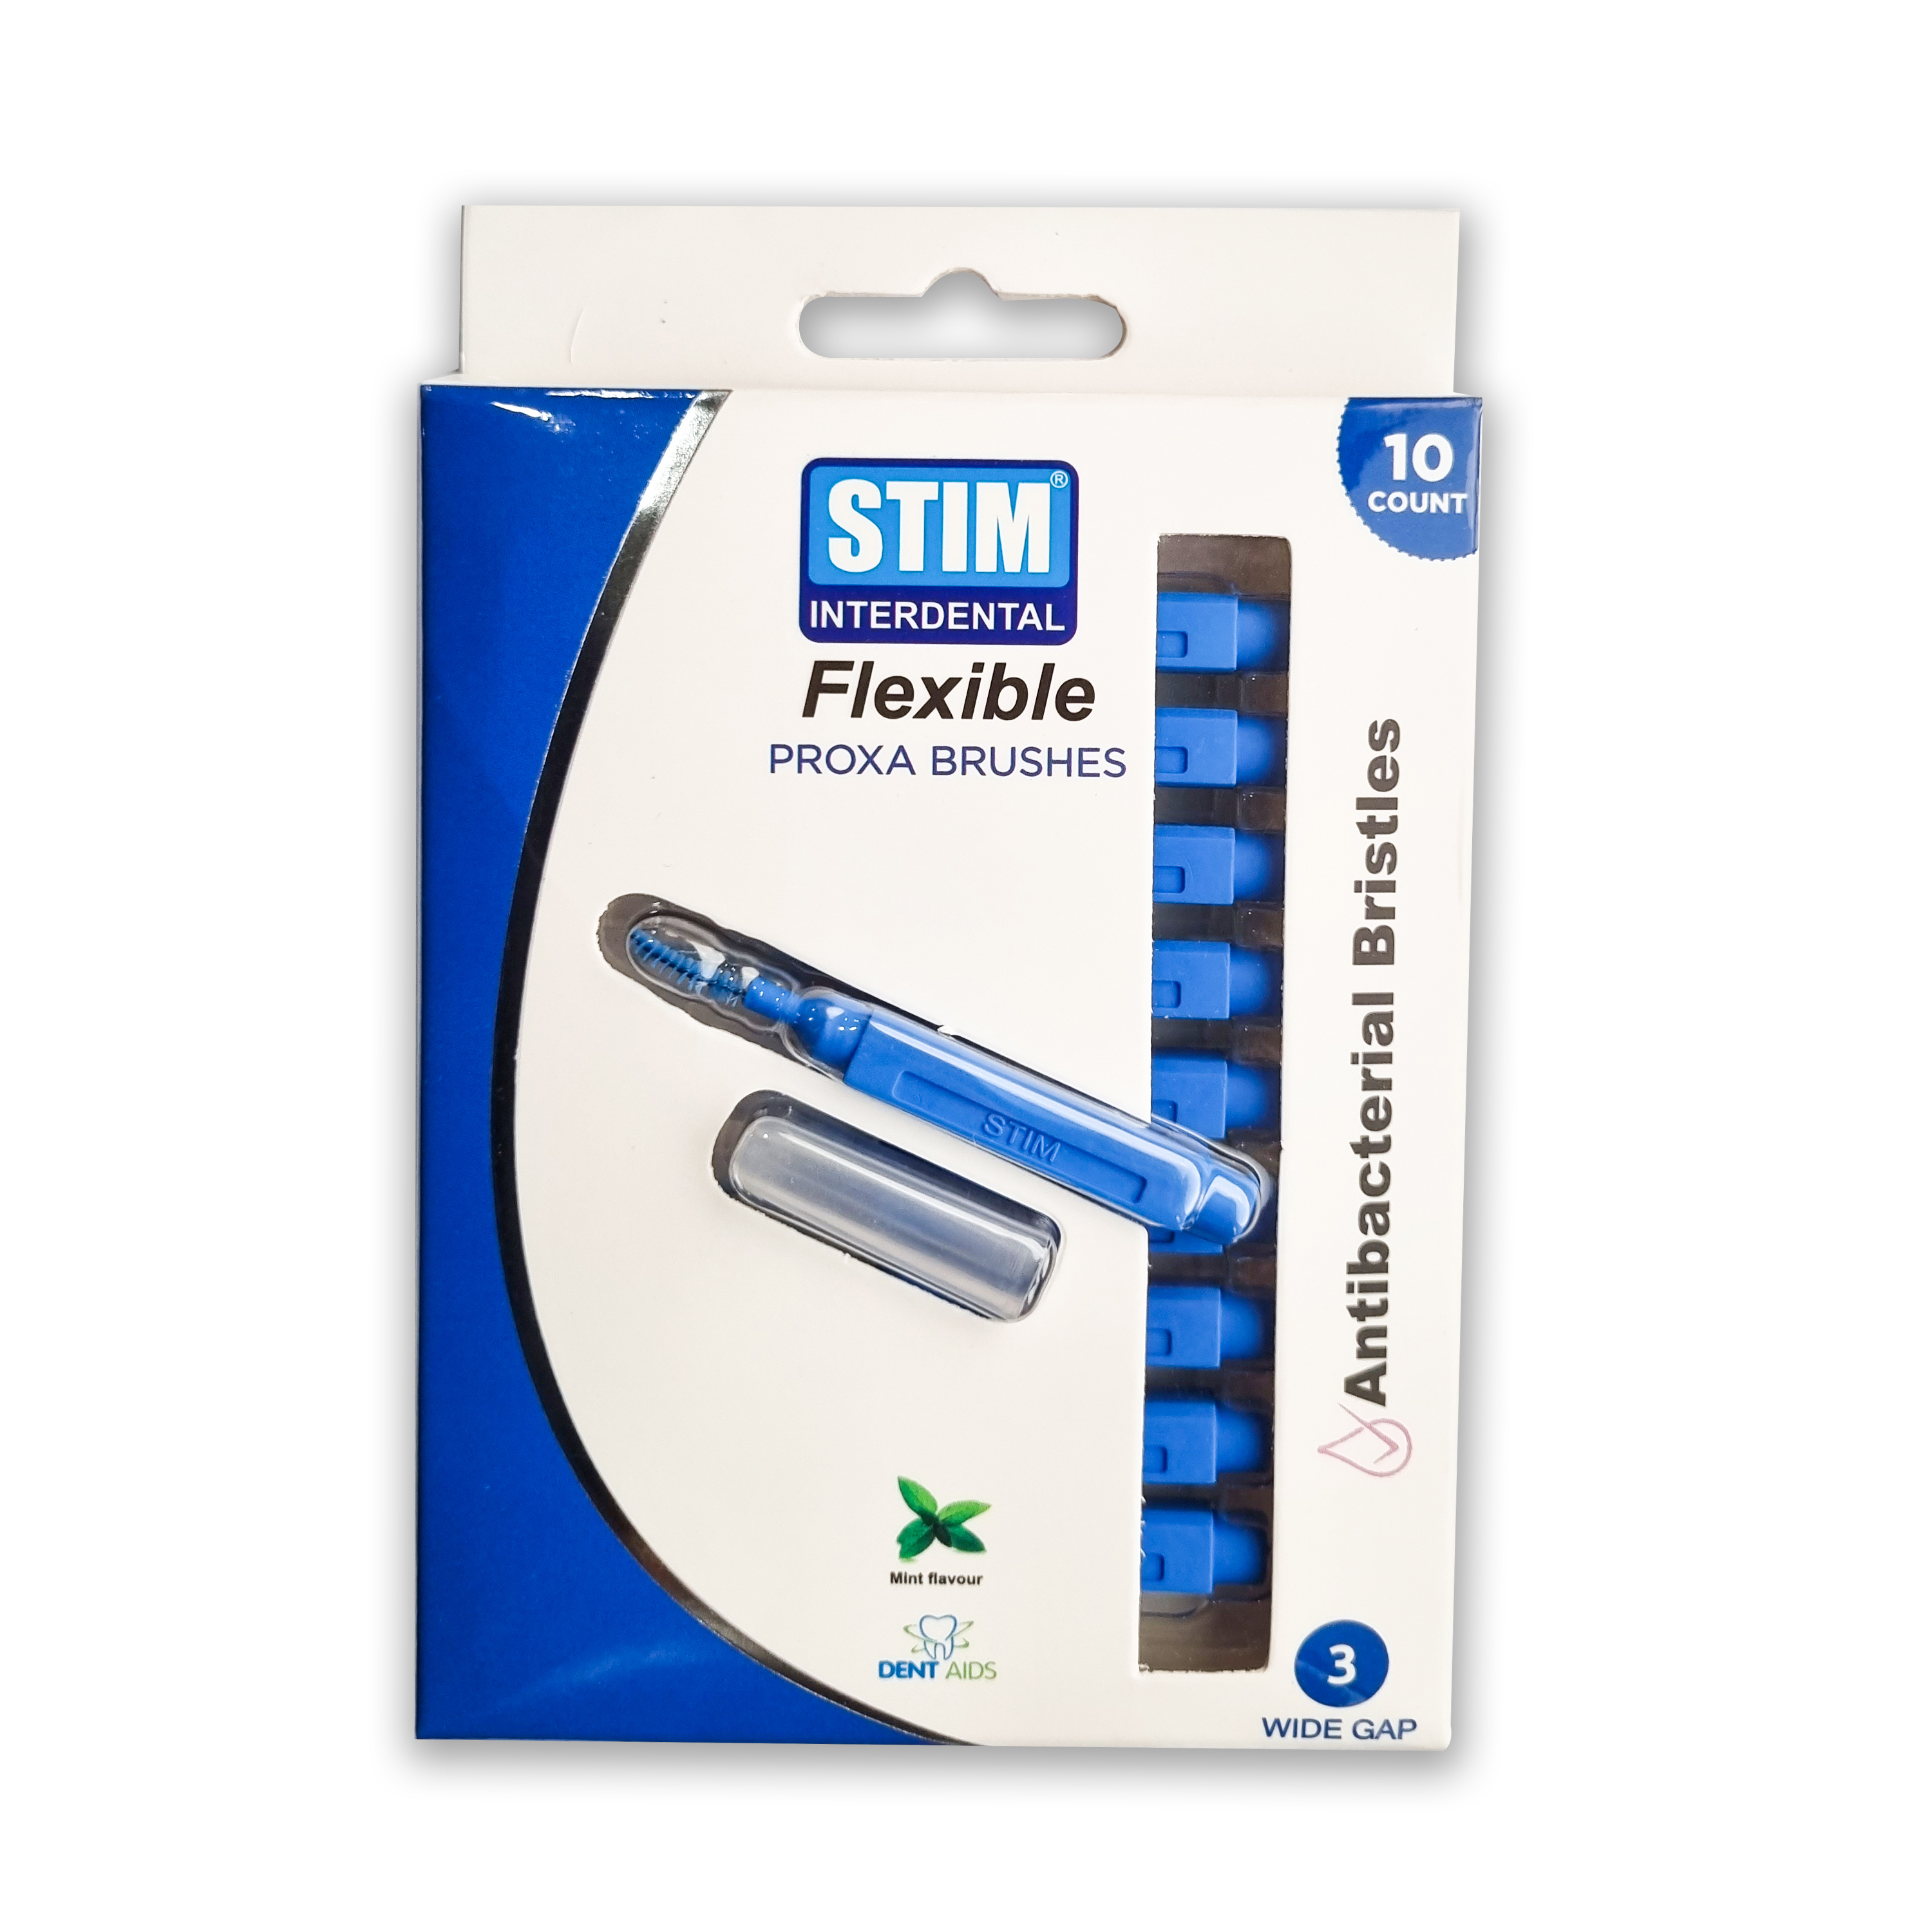 Stim Interdental Flexible Proxa Brush